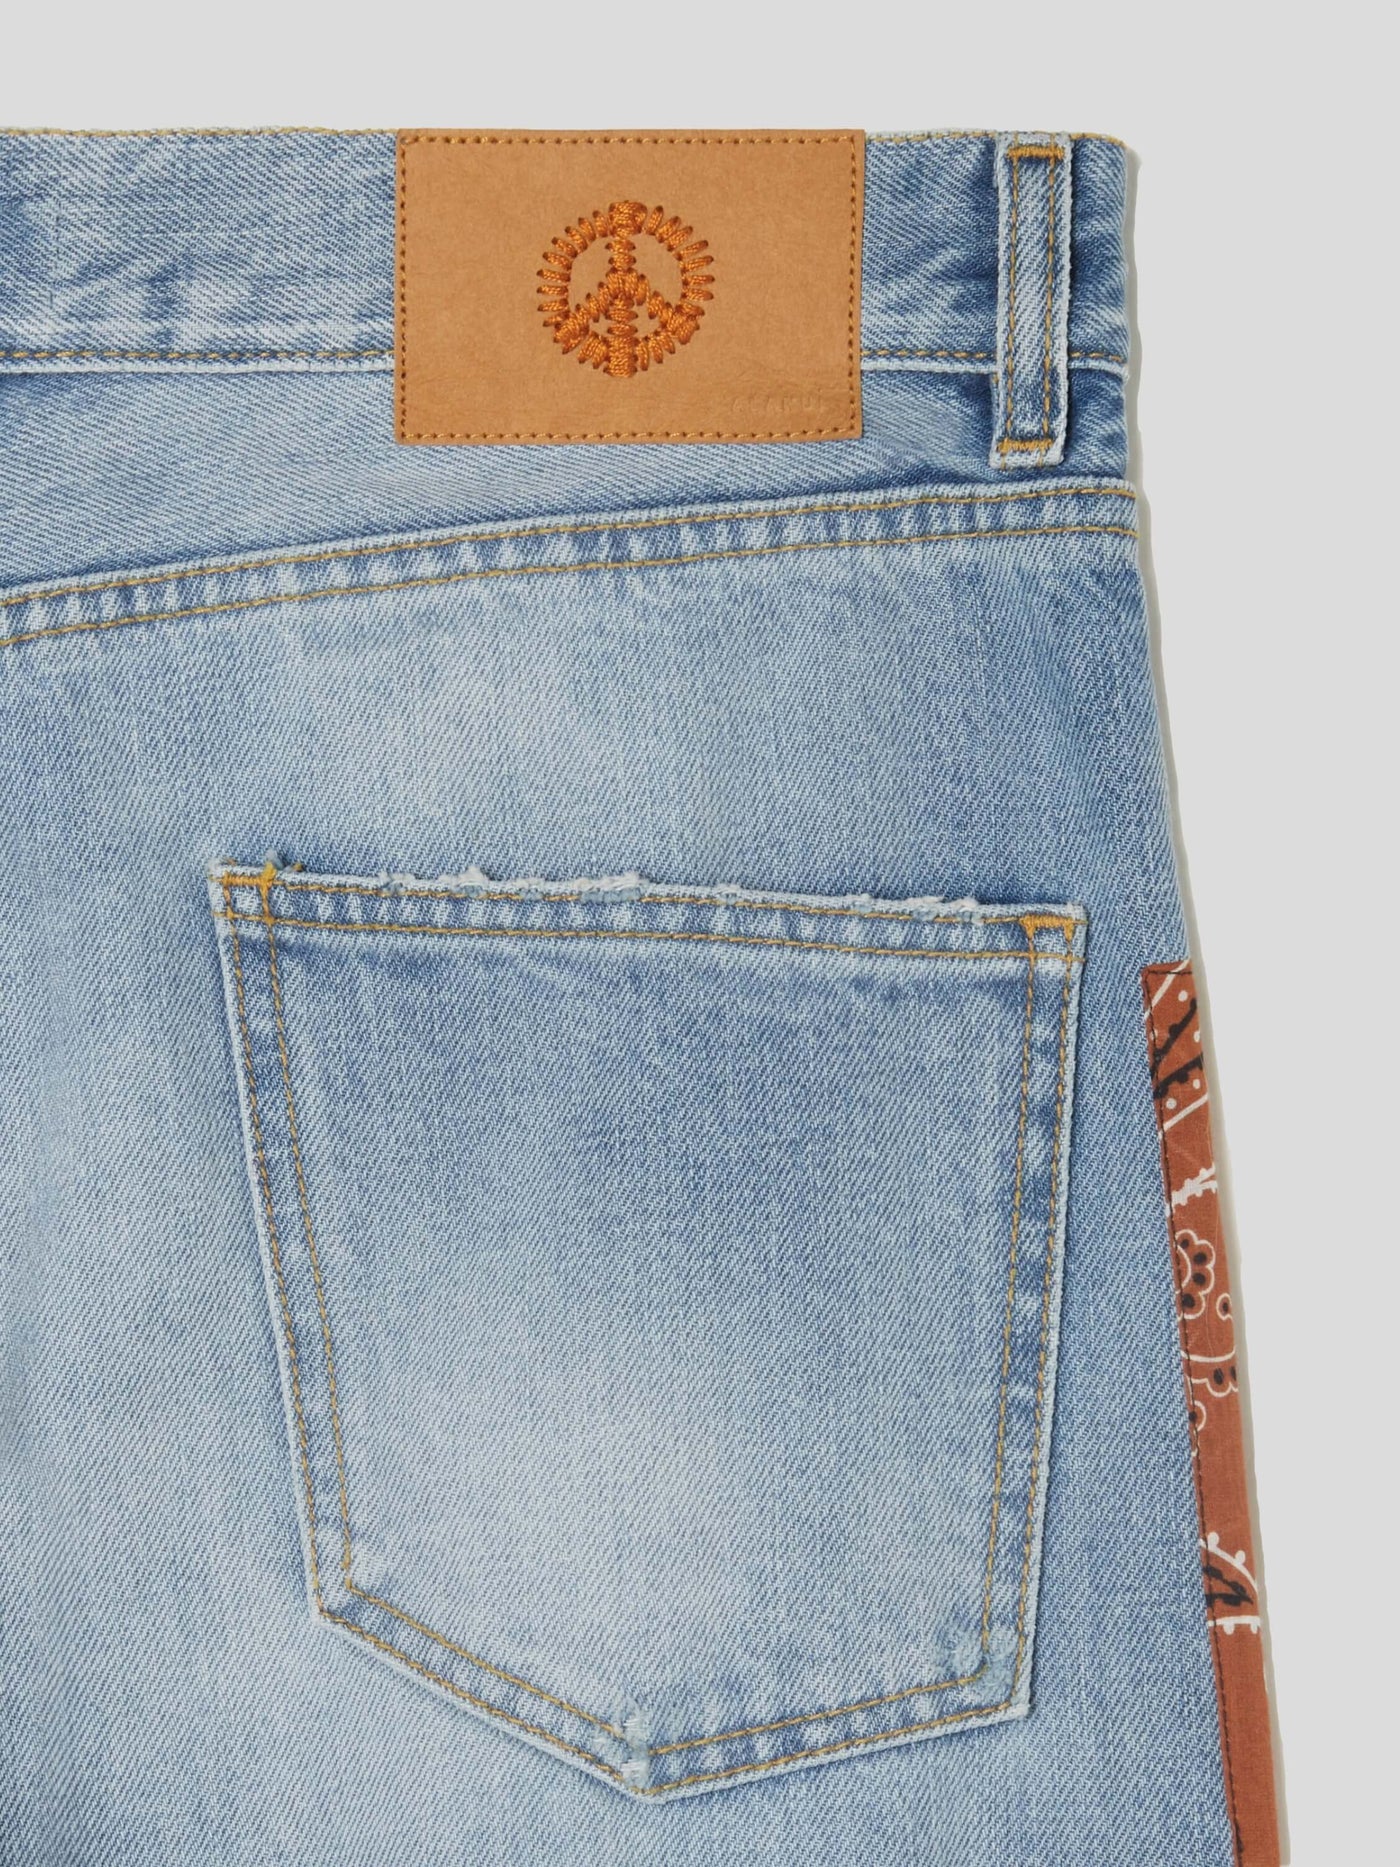 ALANUI Jeans | Denim Jeans California Patchwork | LWYB002S23DEN0014084 26 / ADAM/EVE